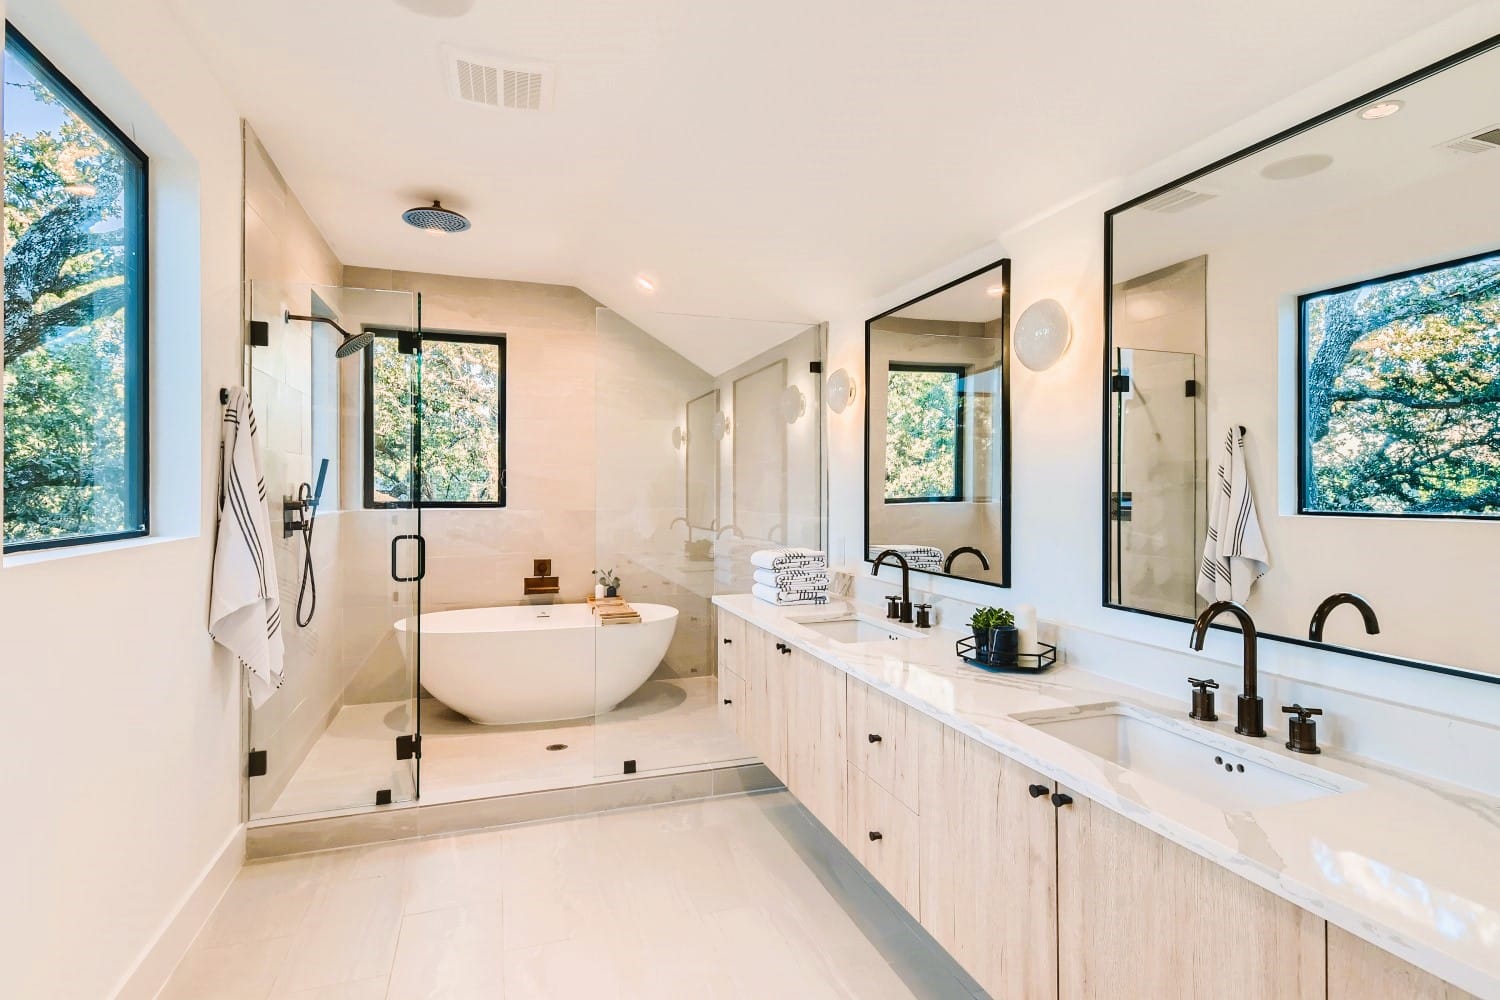 Luxury master bathroom design by Decorilla